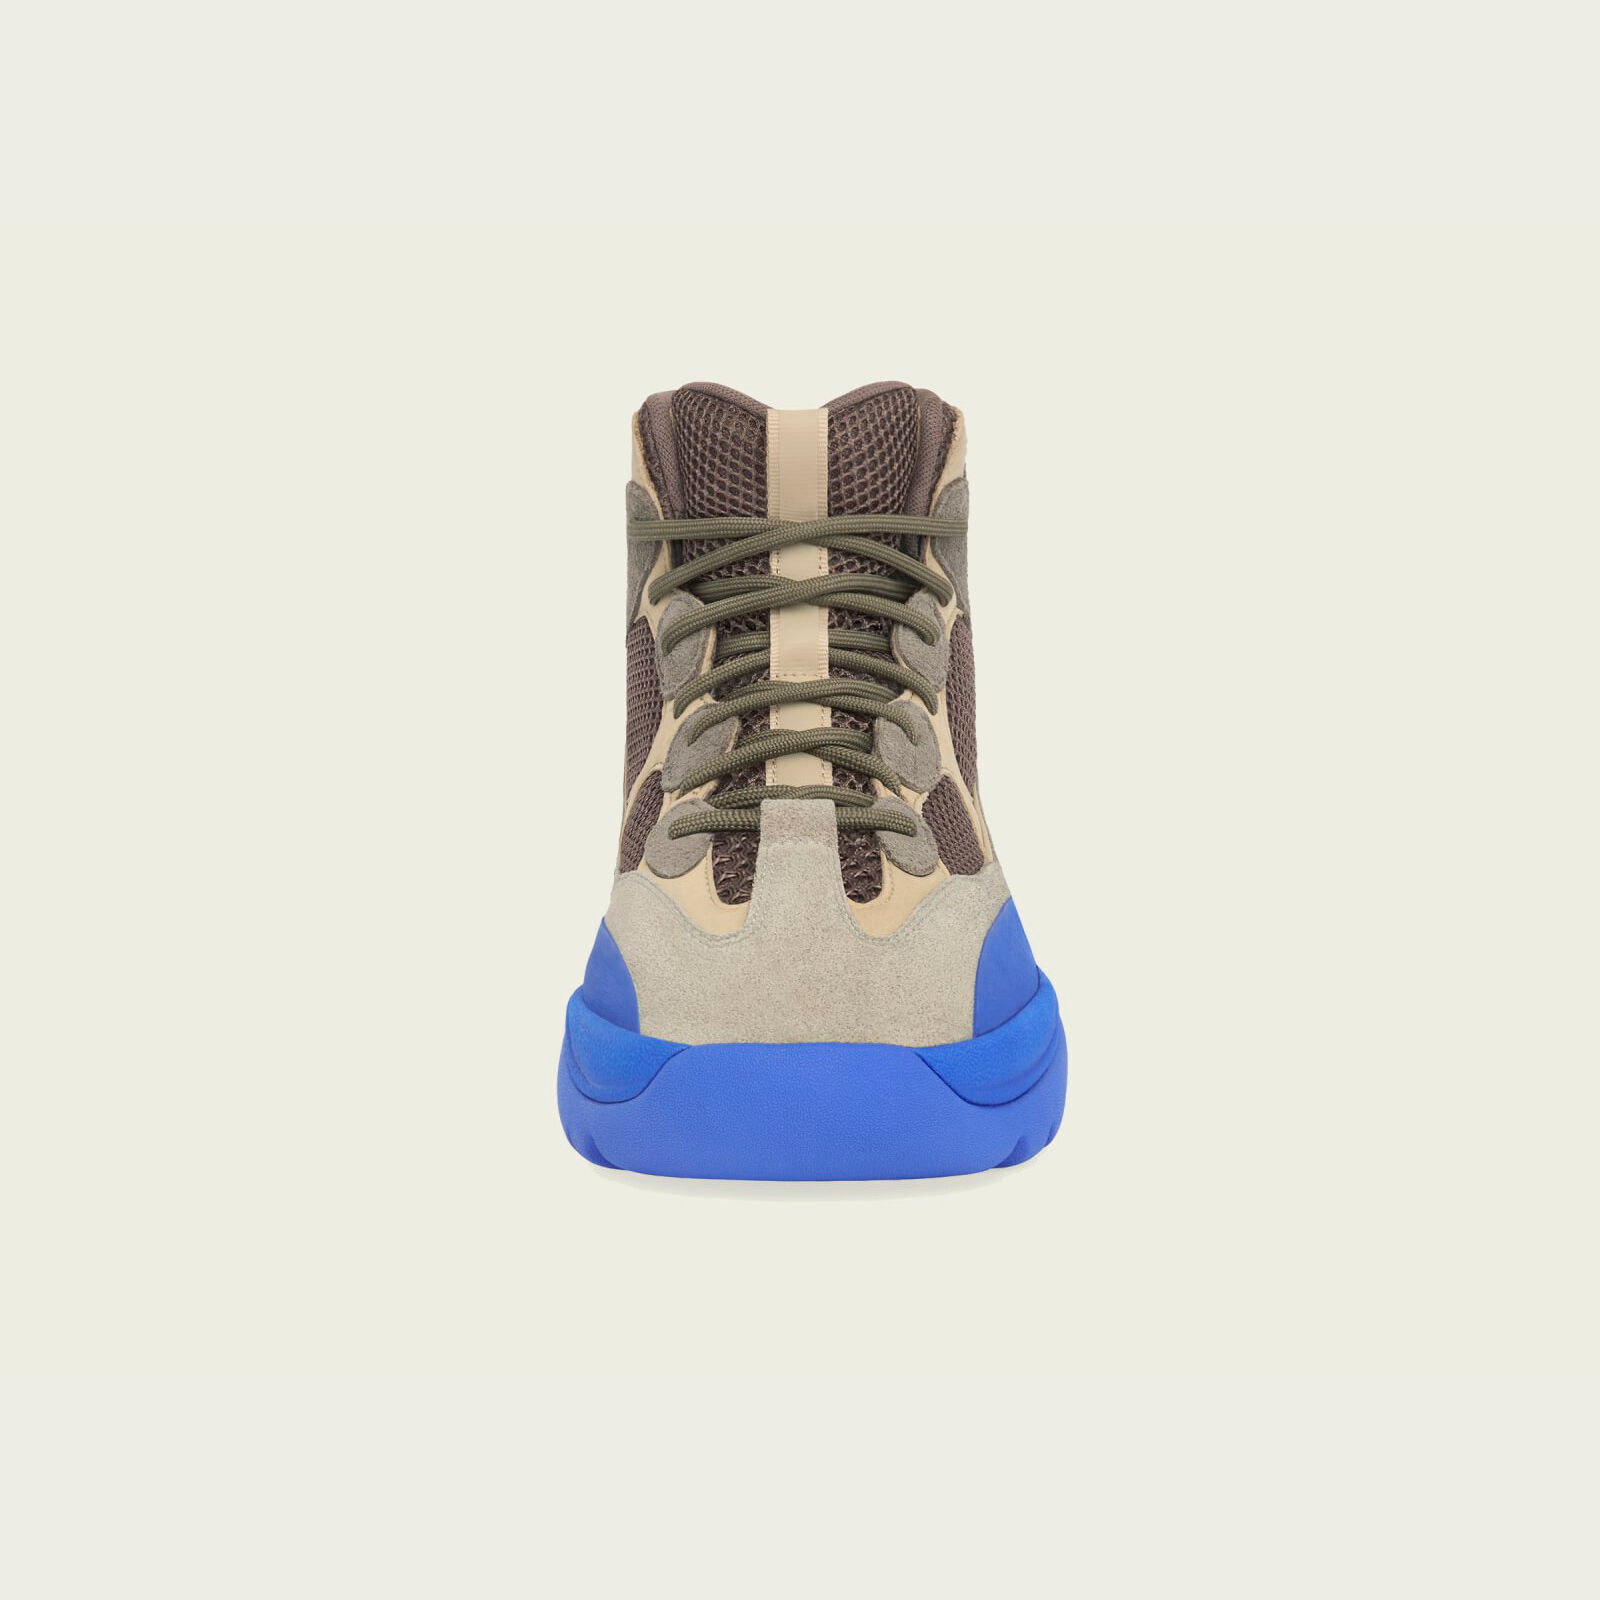 Adidas Yeezy Desert Boot
Taupe Blue